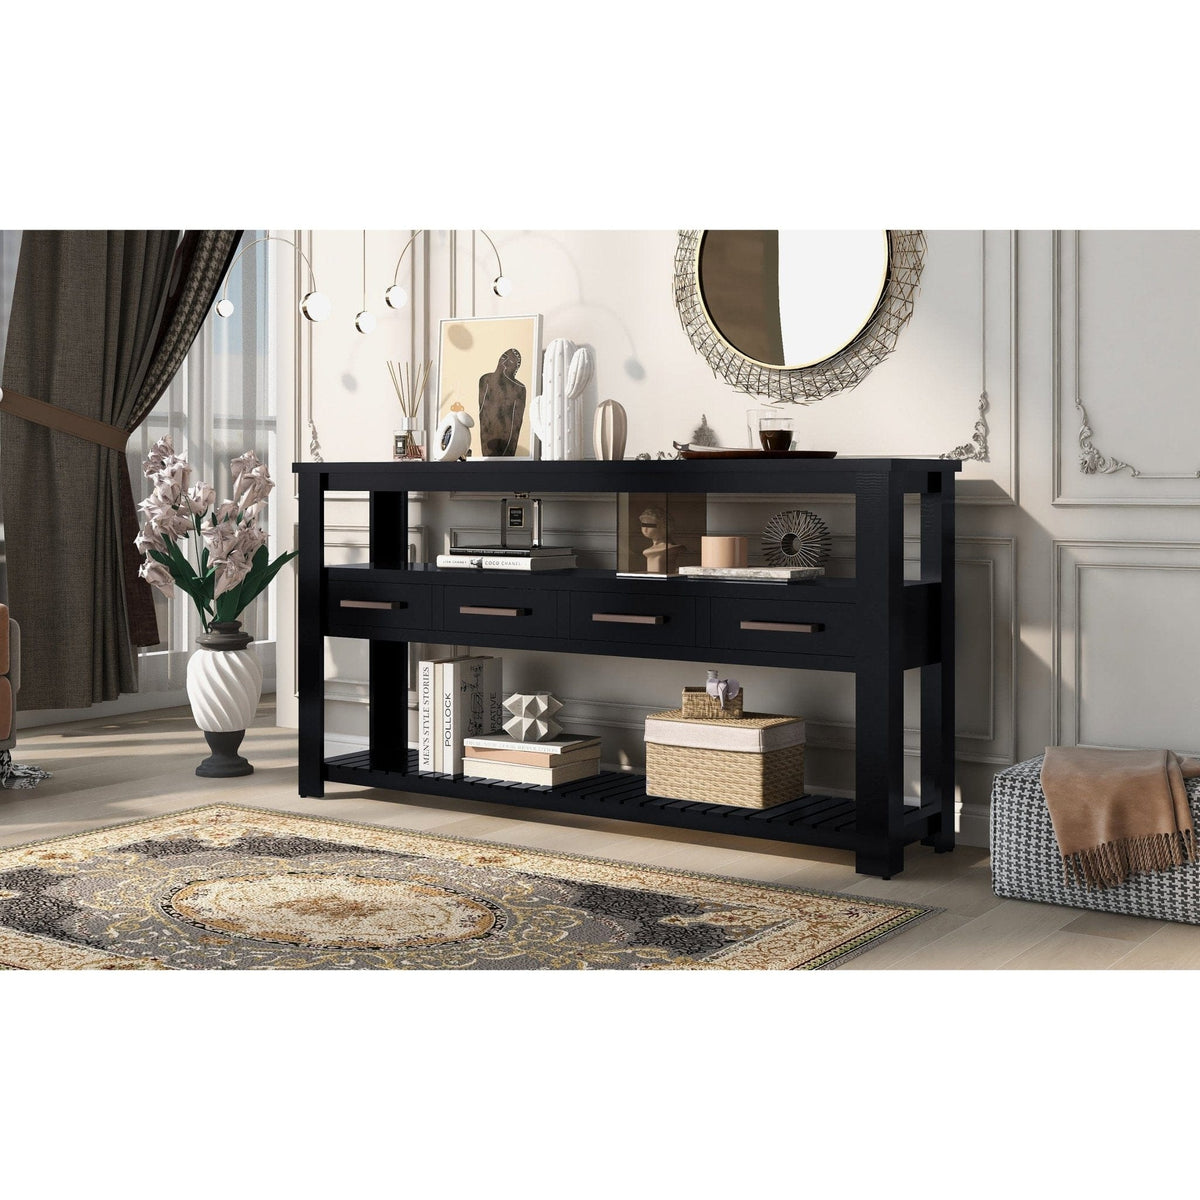 Ustyle Black Modern Sofa Table - 3 Tier Shelves Black Modern Sofa Table | Furniture Florida  Mattress-Xperts-Florida